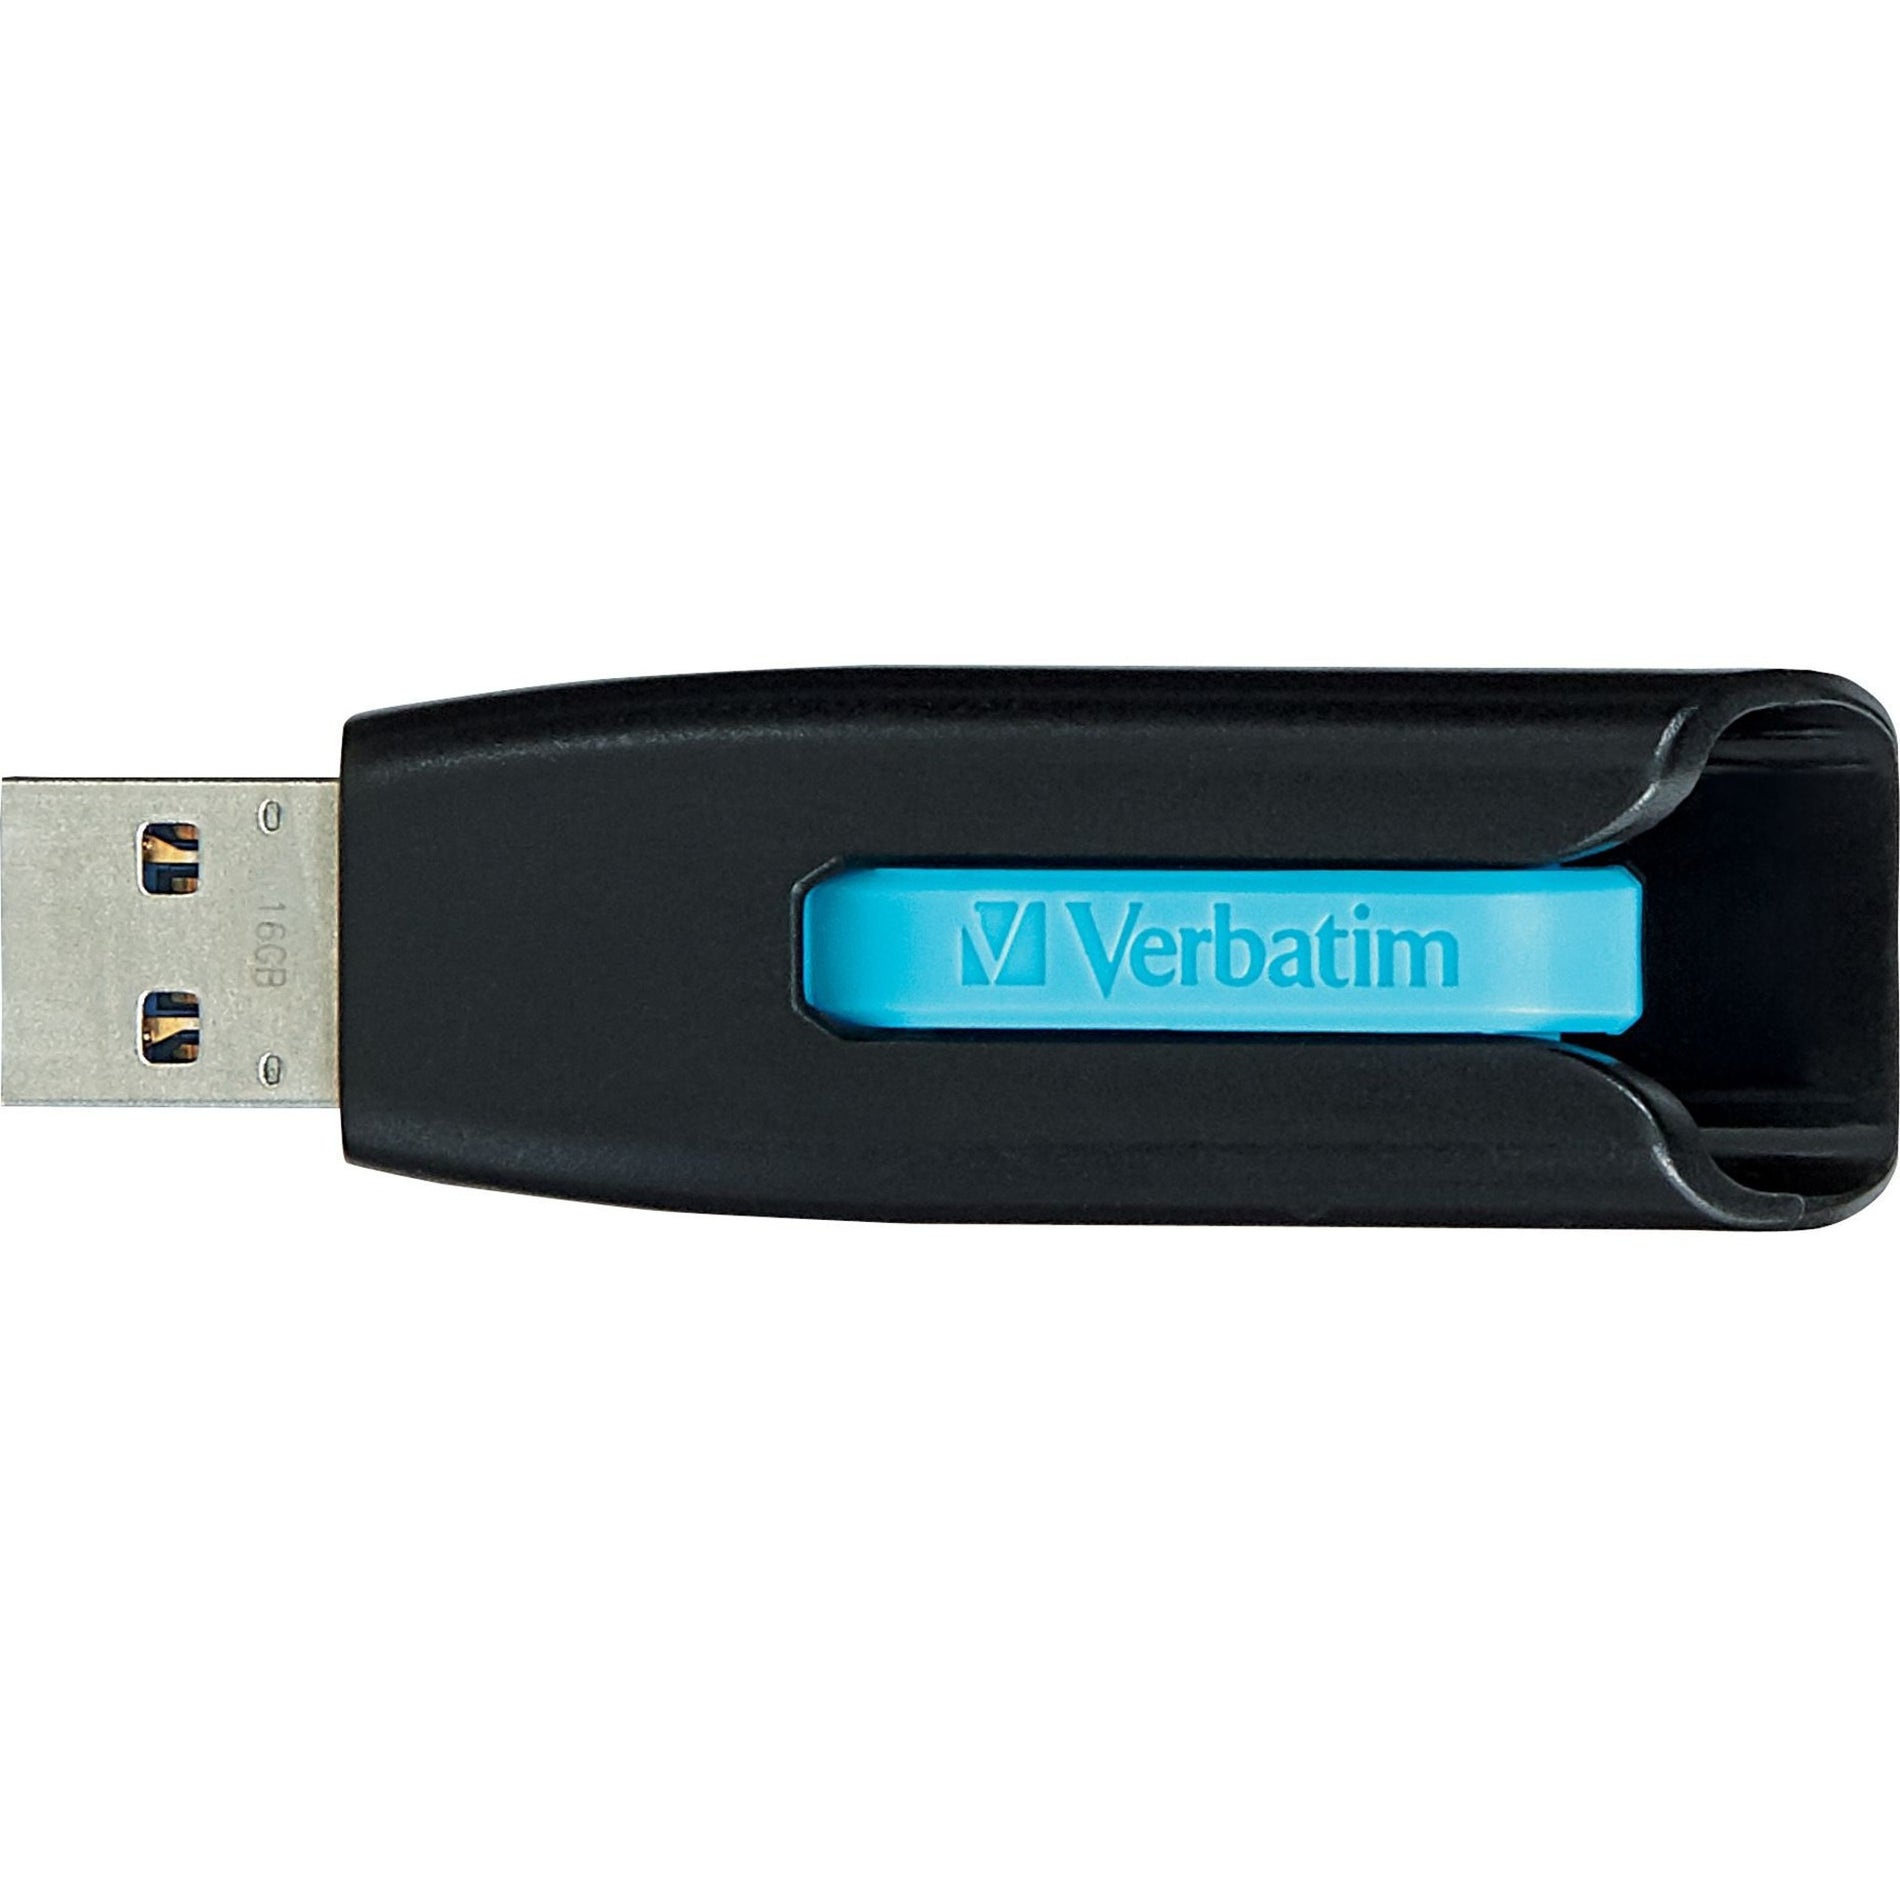 Microban 49176 Store 'n' Go V3 USB Drive 16GB Blue 领先品牌：迈克班 (Microban) 产品型号：49176 Store 'n' Go V3 USB 驱动器，16GB，蓝色